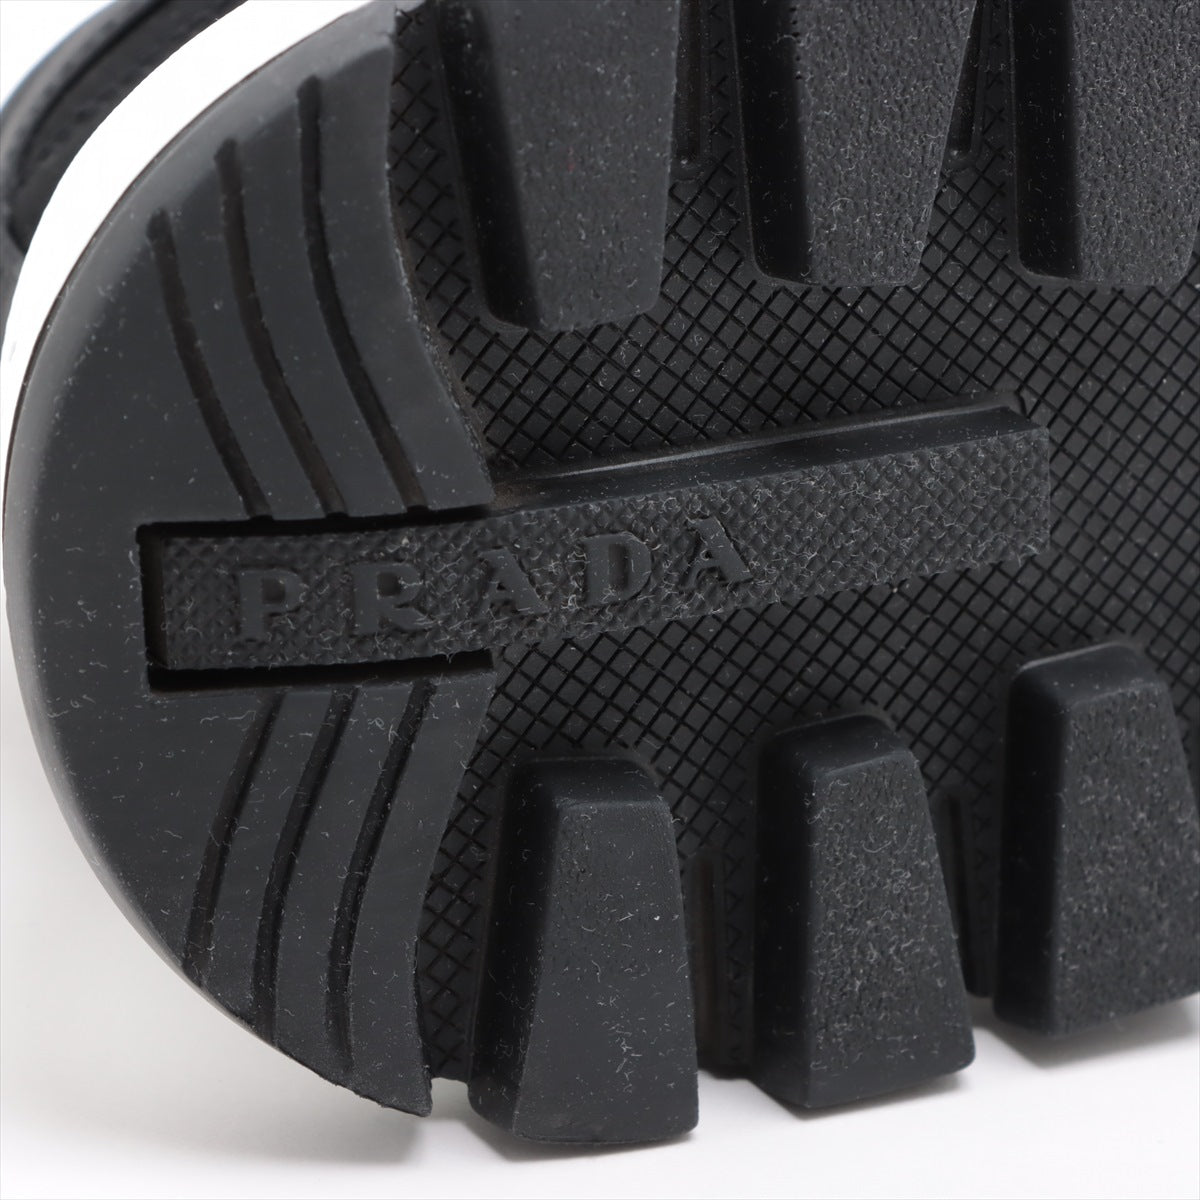 Prada Re Nylon Li Nylon X Leather Trainers 38 1/2  Black 1E804M Triangle Logo